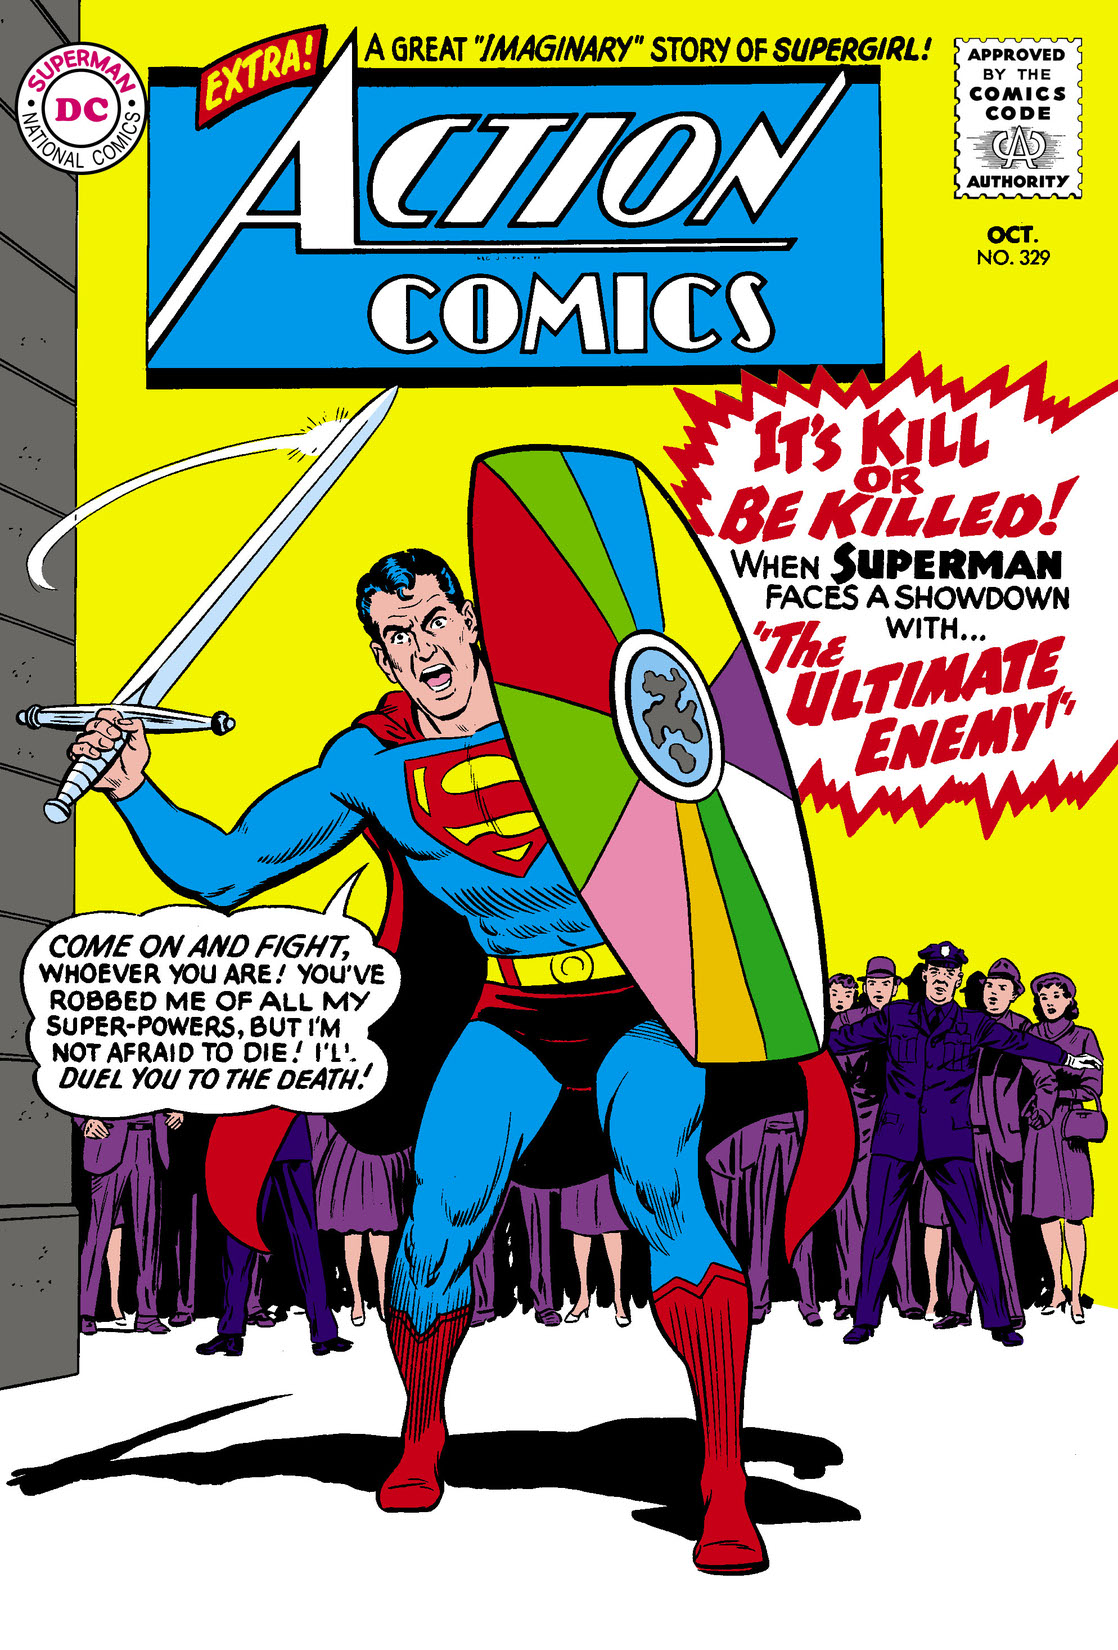 Action Comics (1938-) #329 preview images